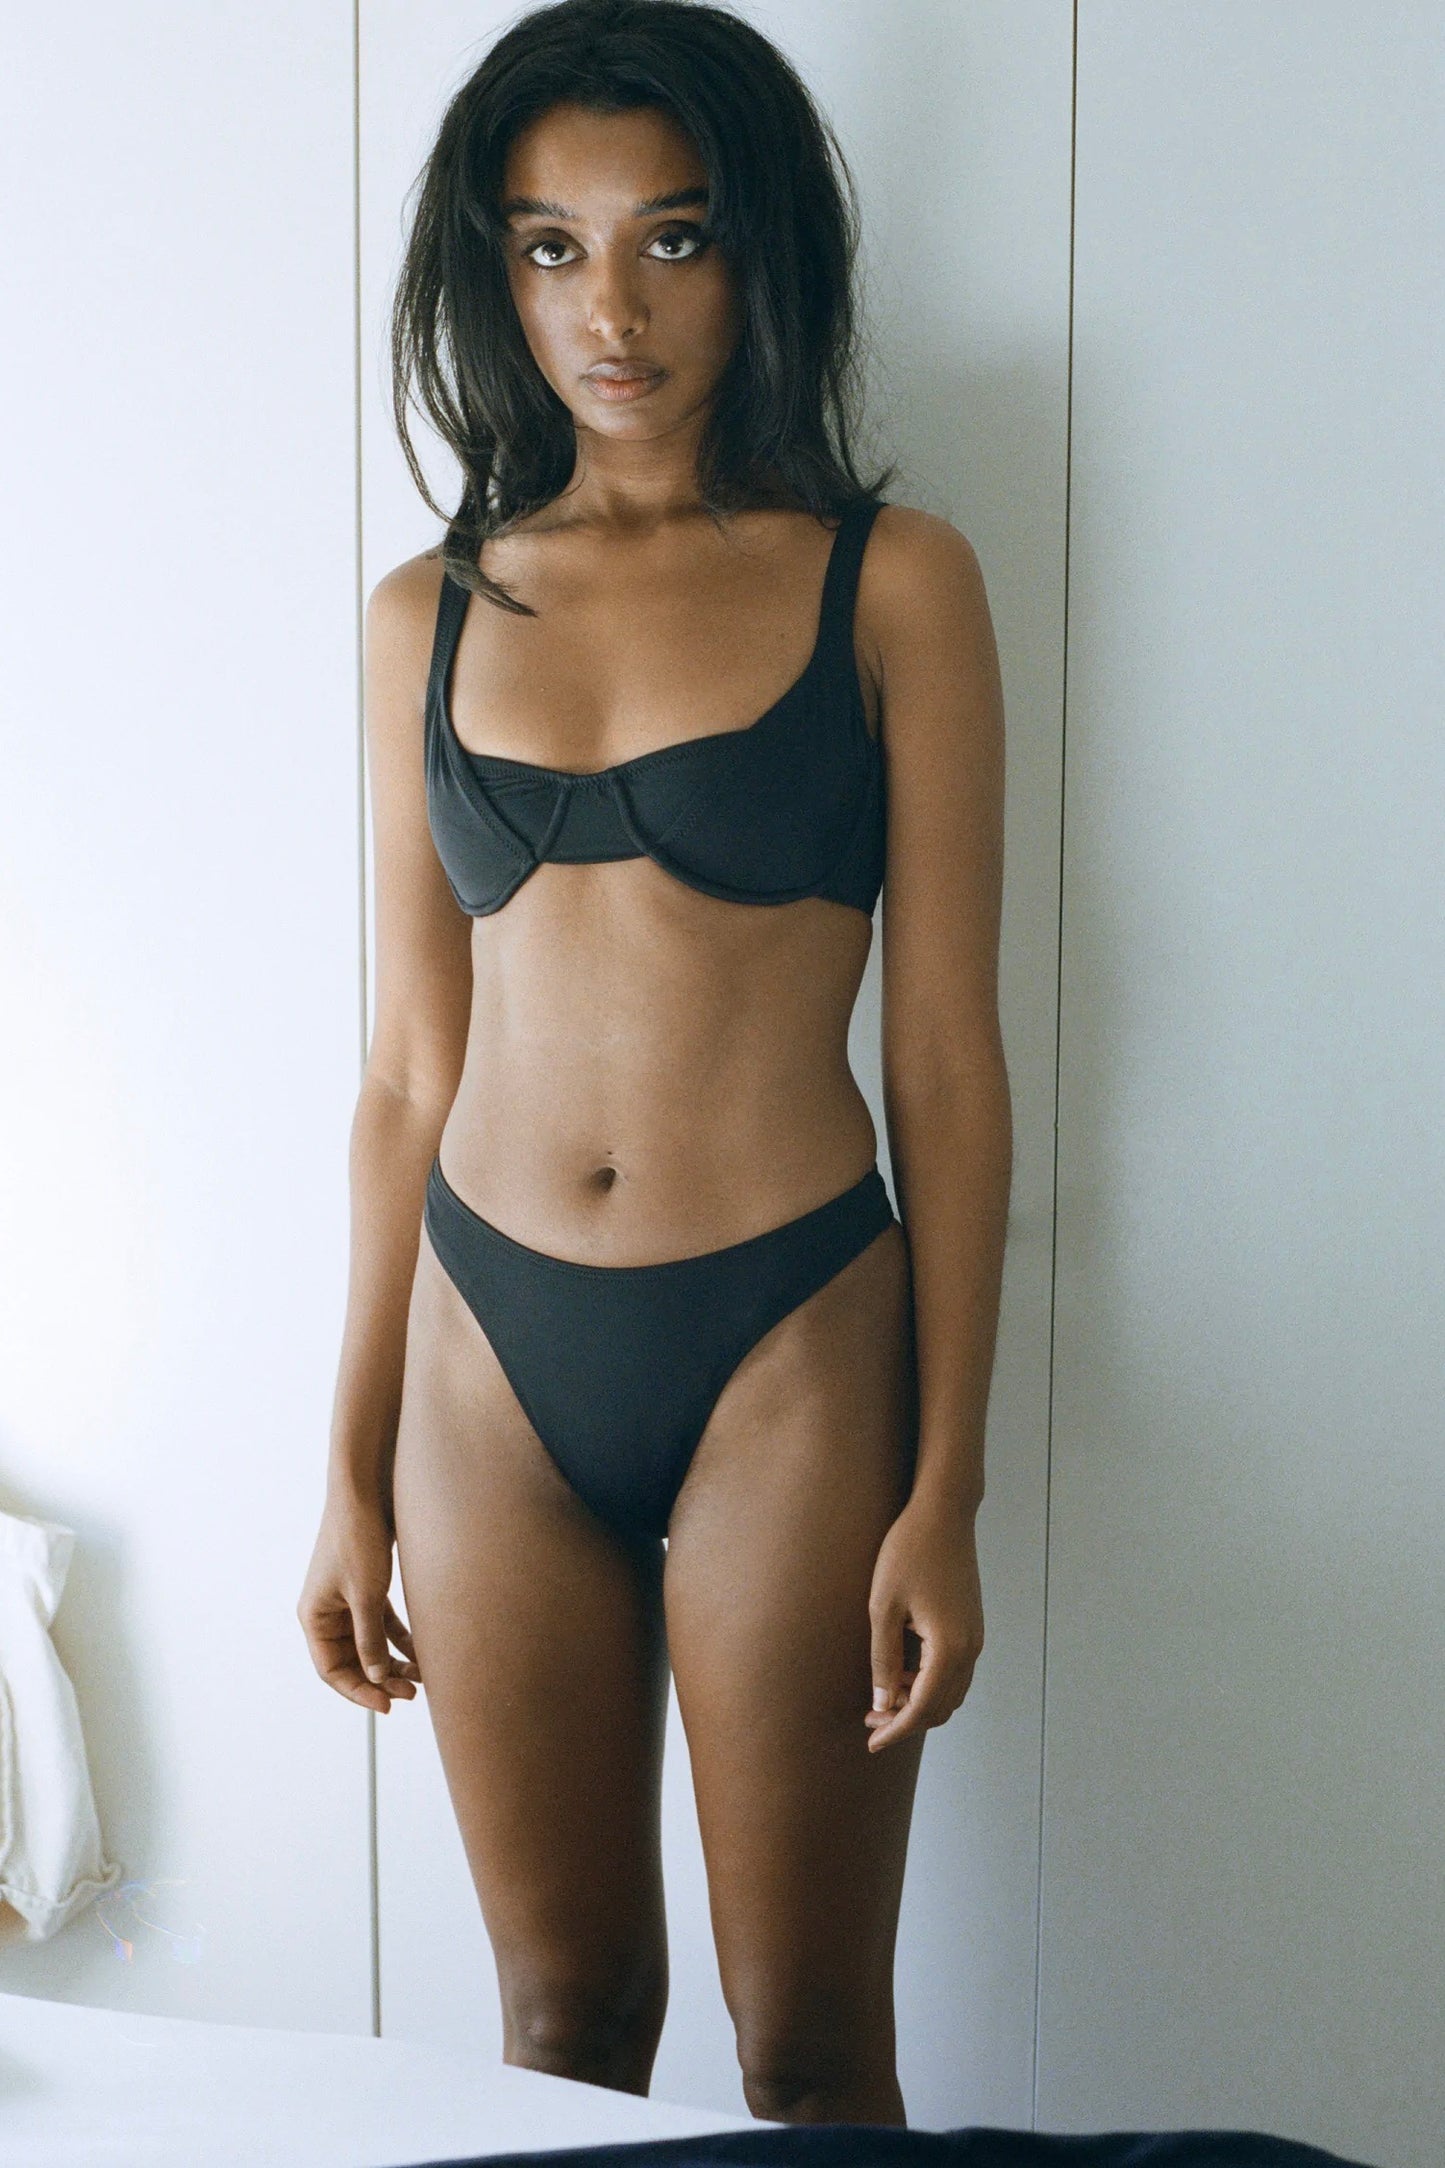 Buci- Neuve Bikini Bottom: Black